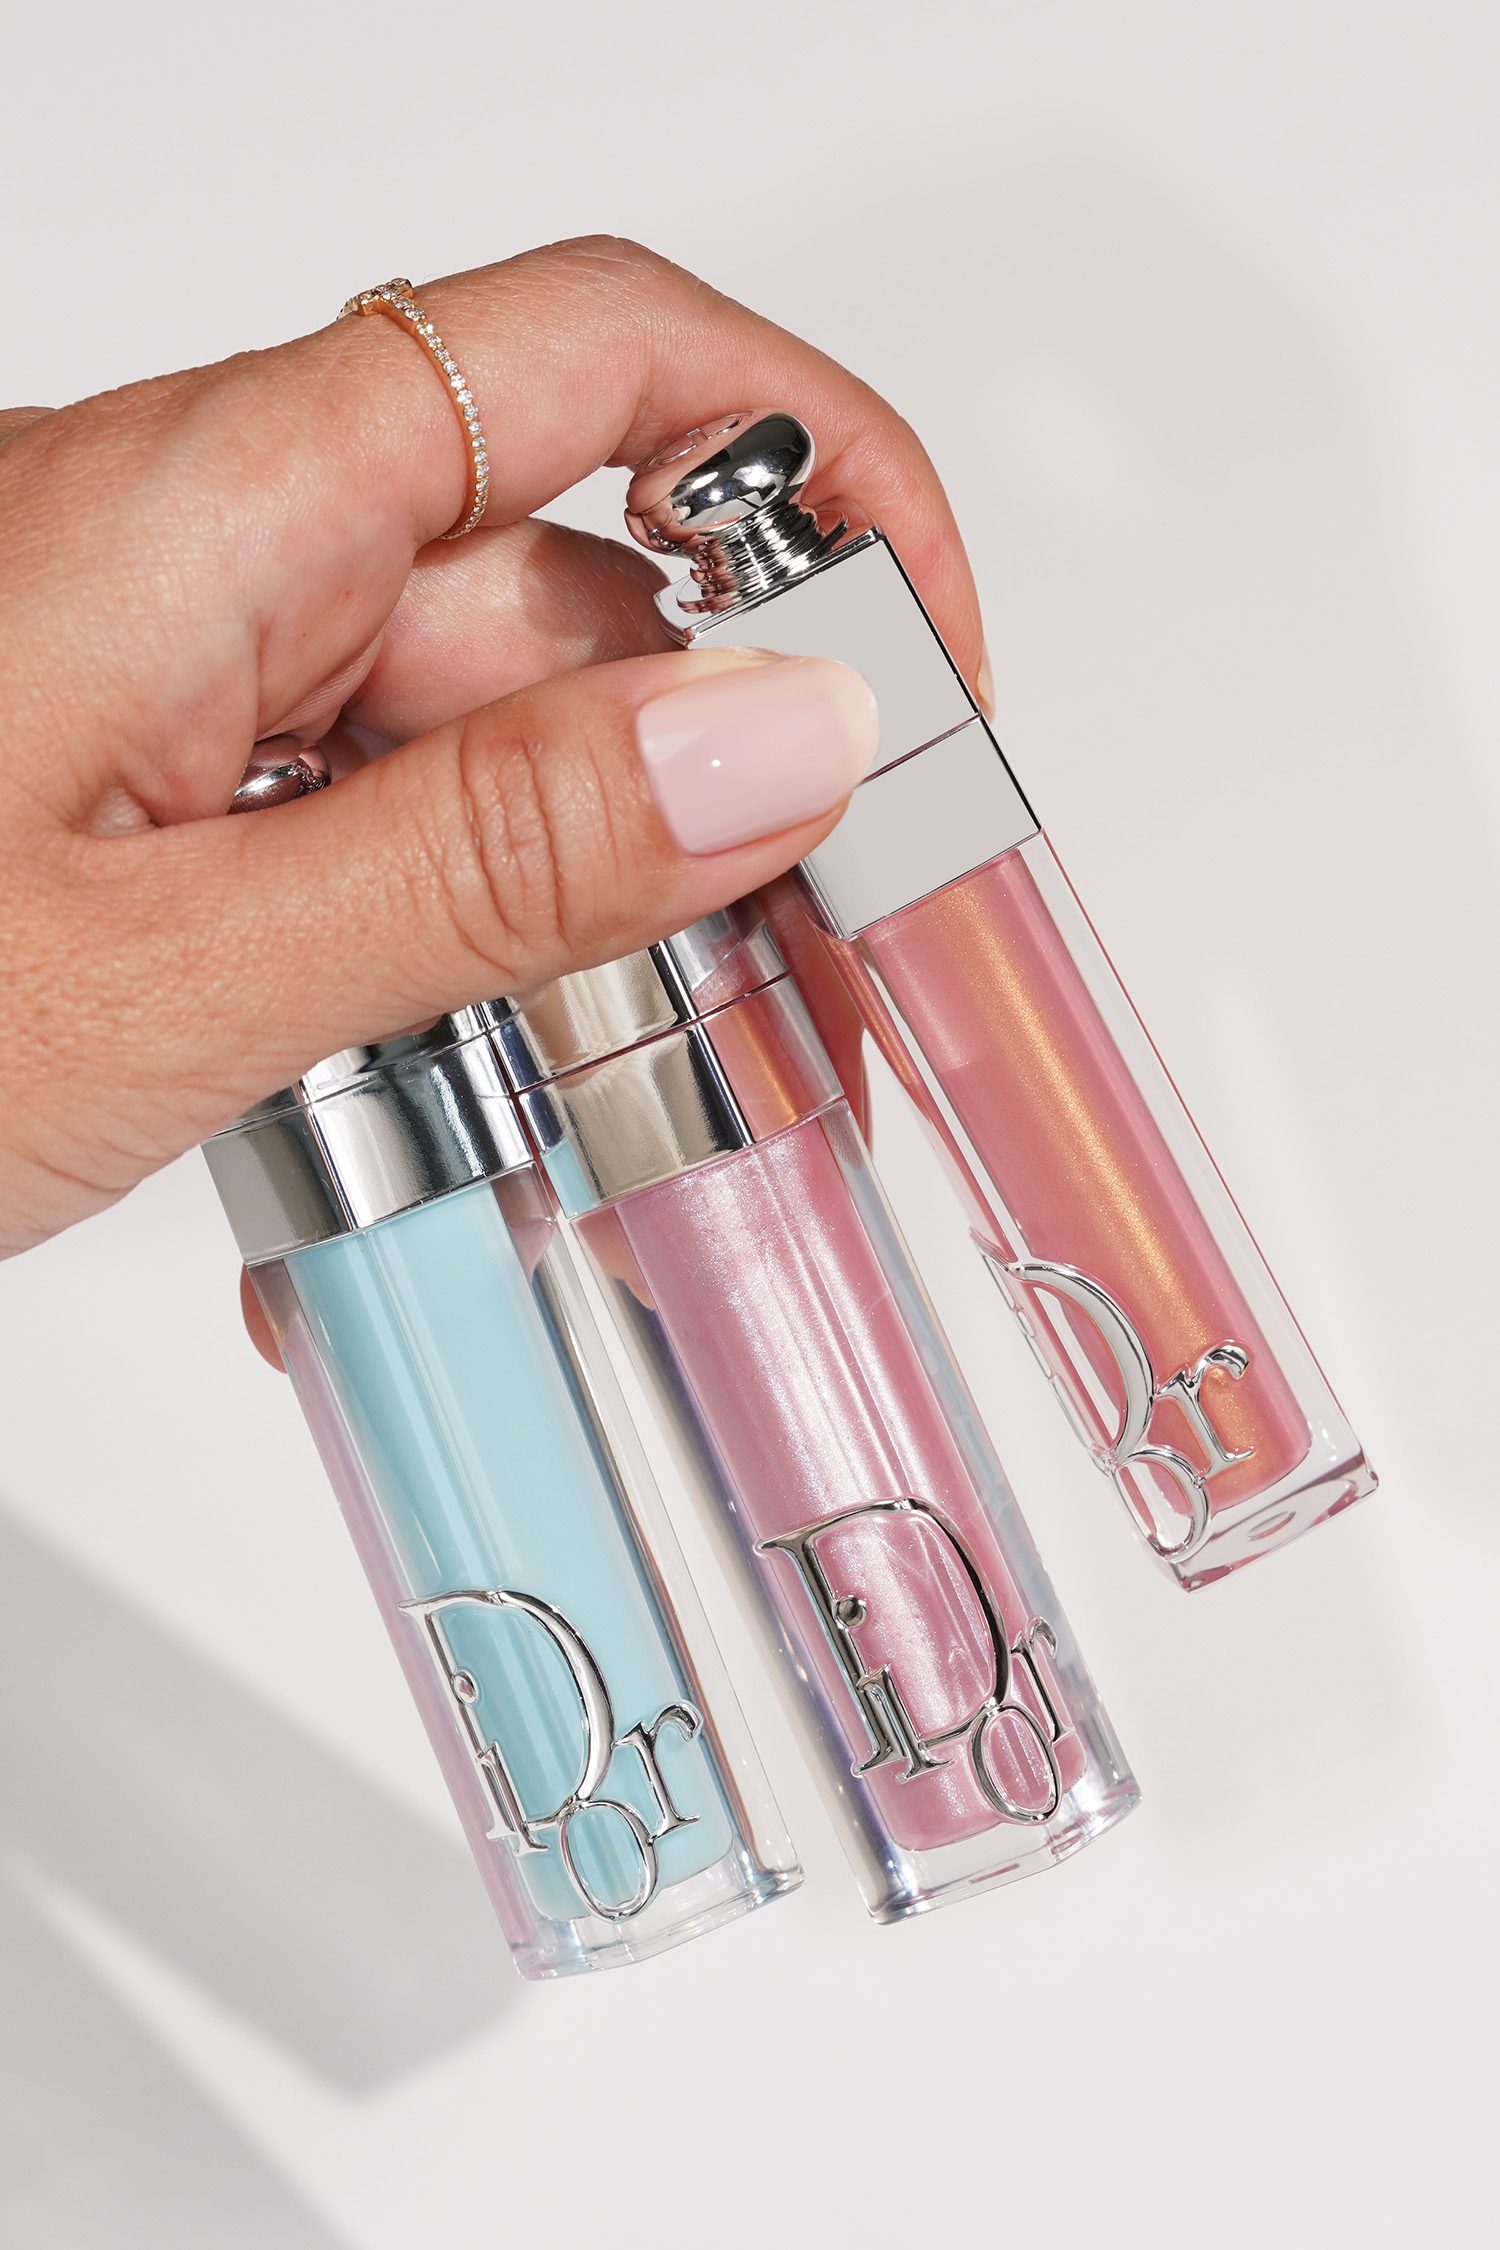 Dior Addict Lip Maximizers – New Fall/Holiday Shades - The Beauty Look Book